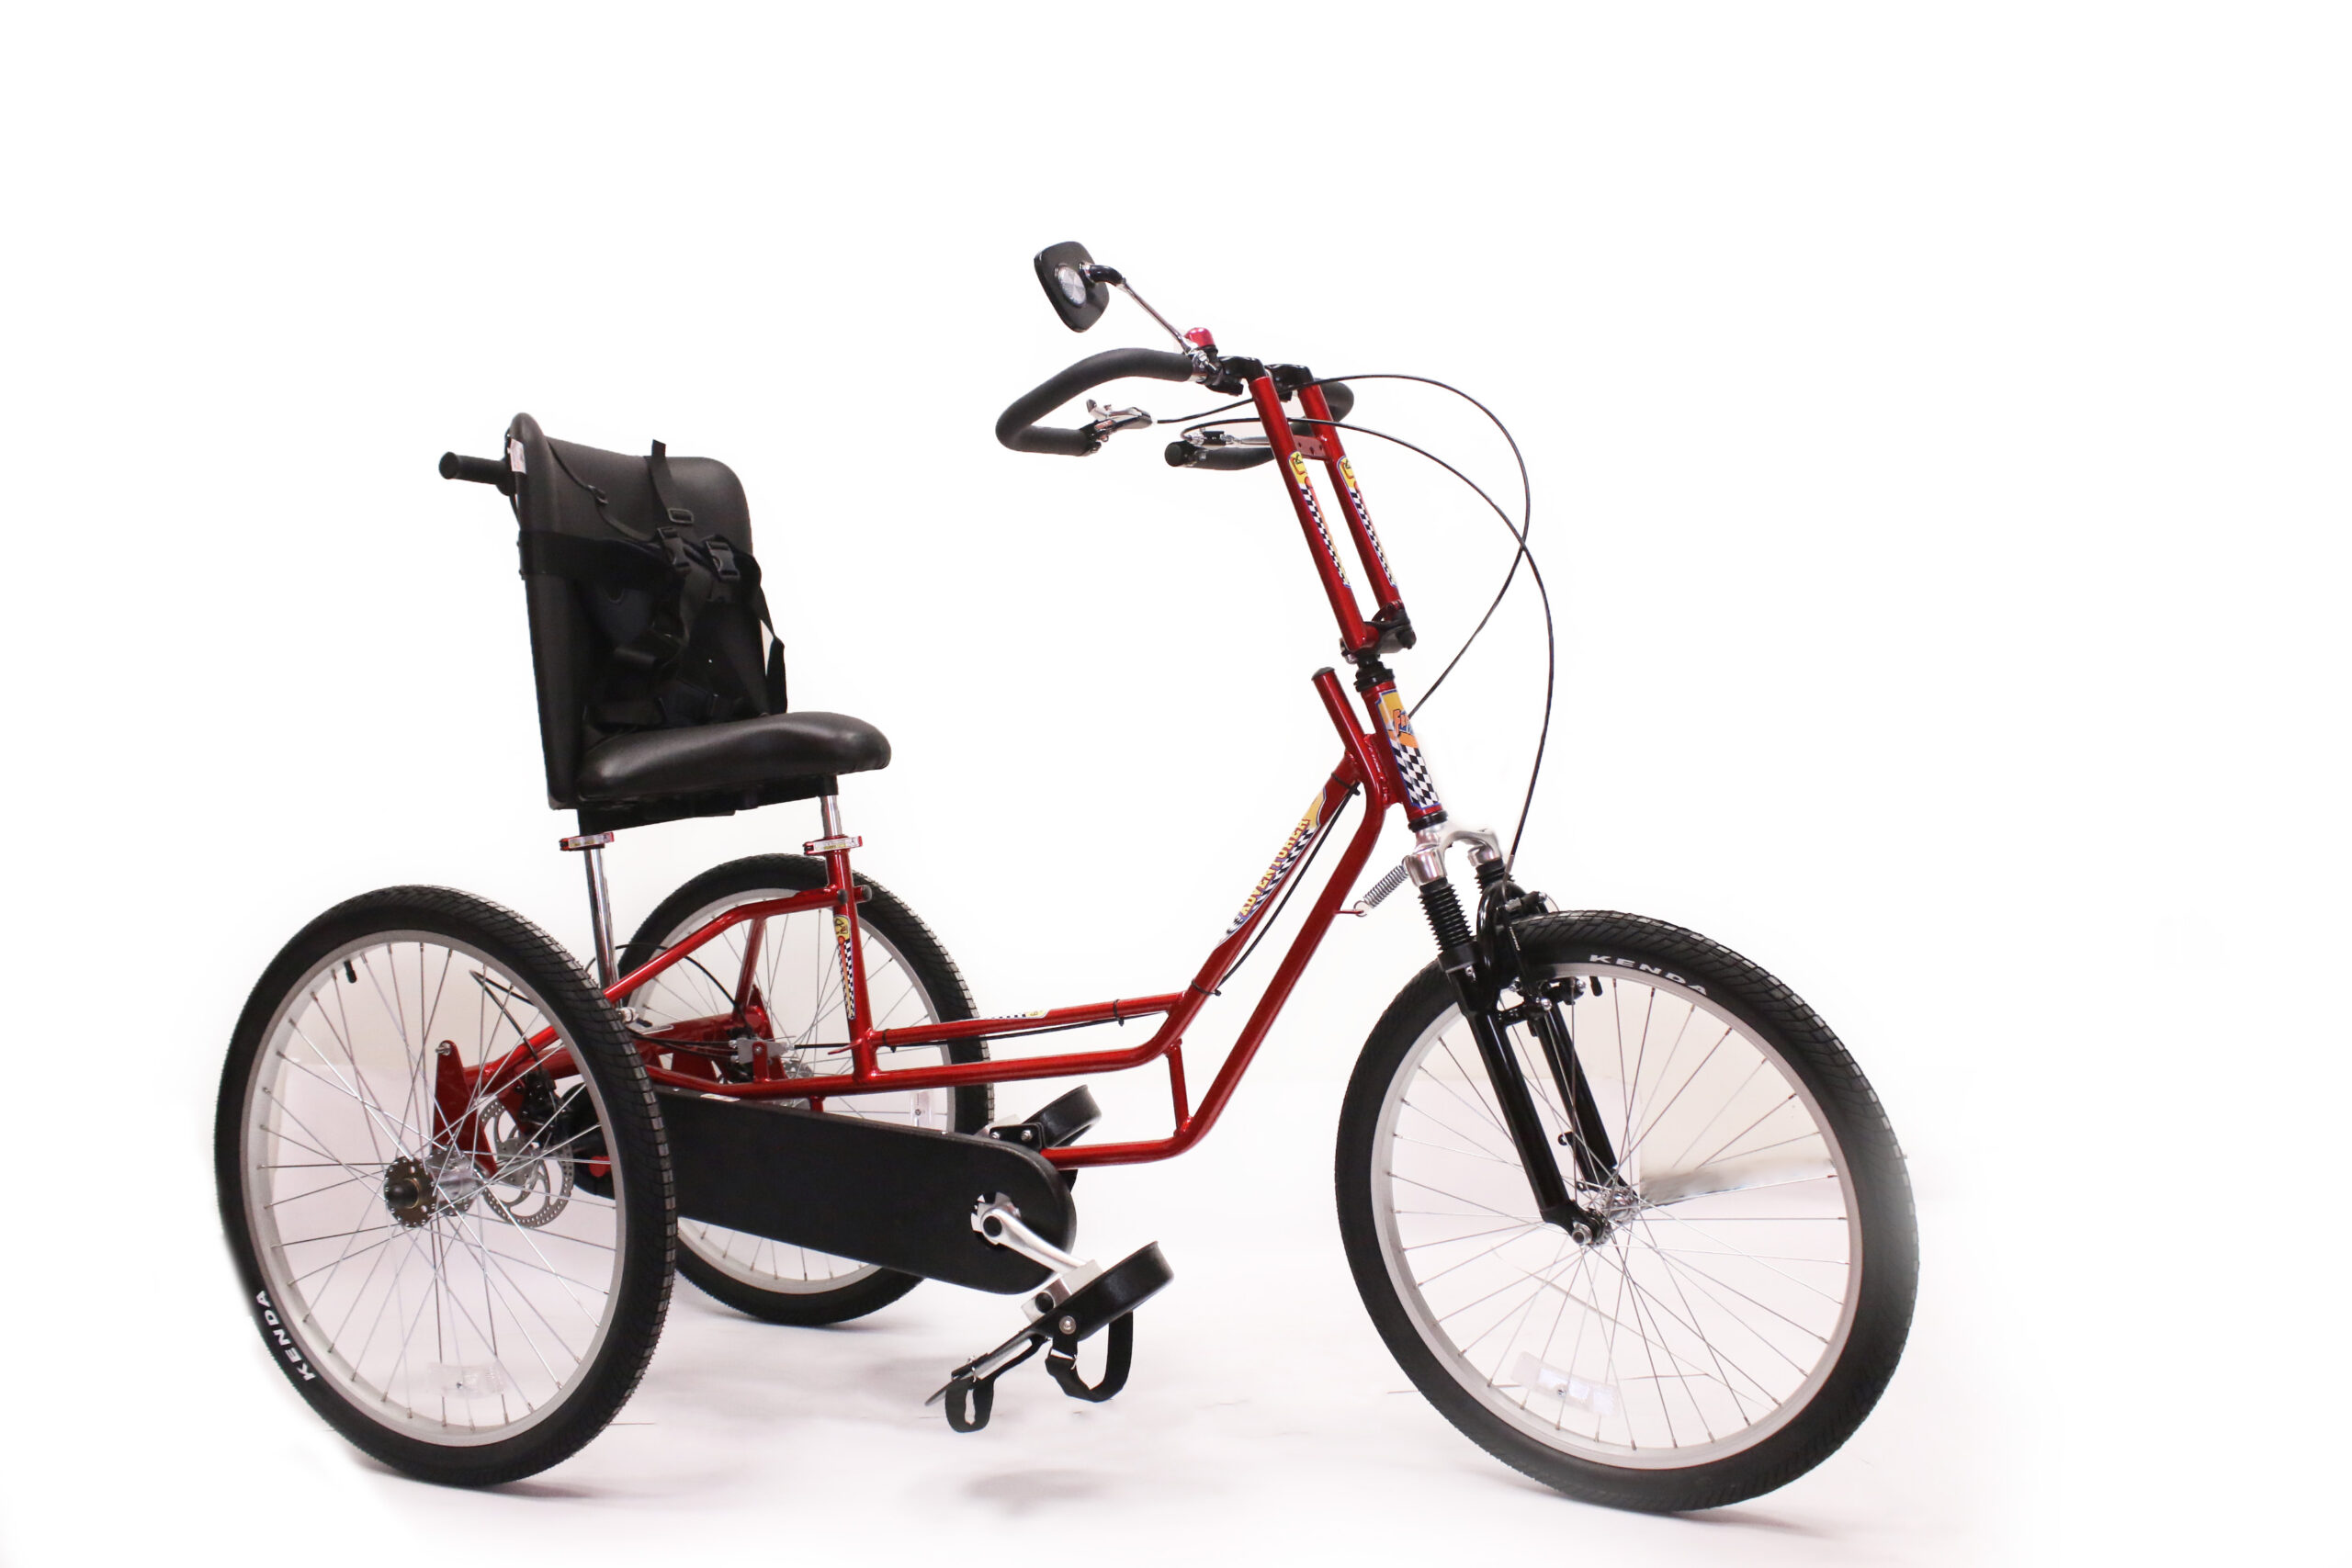 Adventurer Series Adaptive Bike